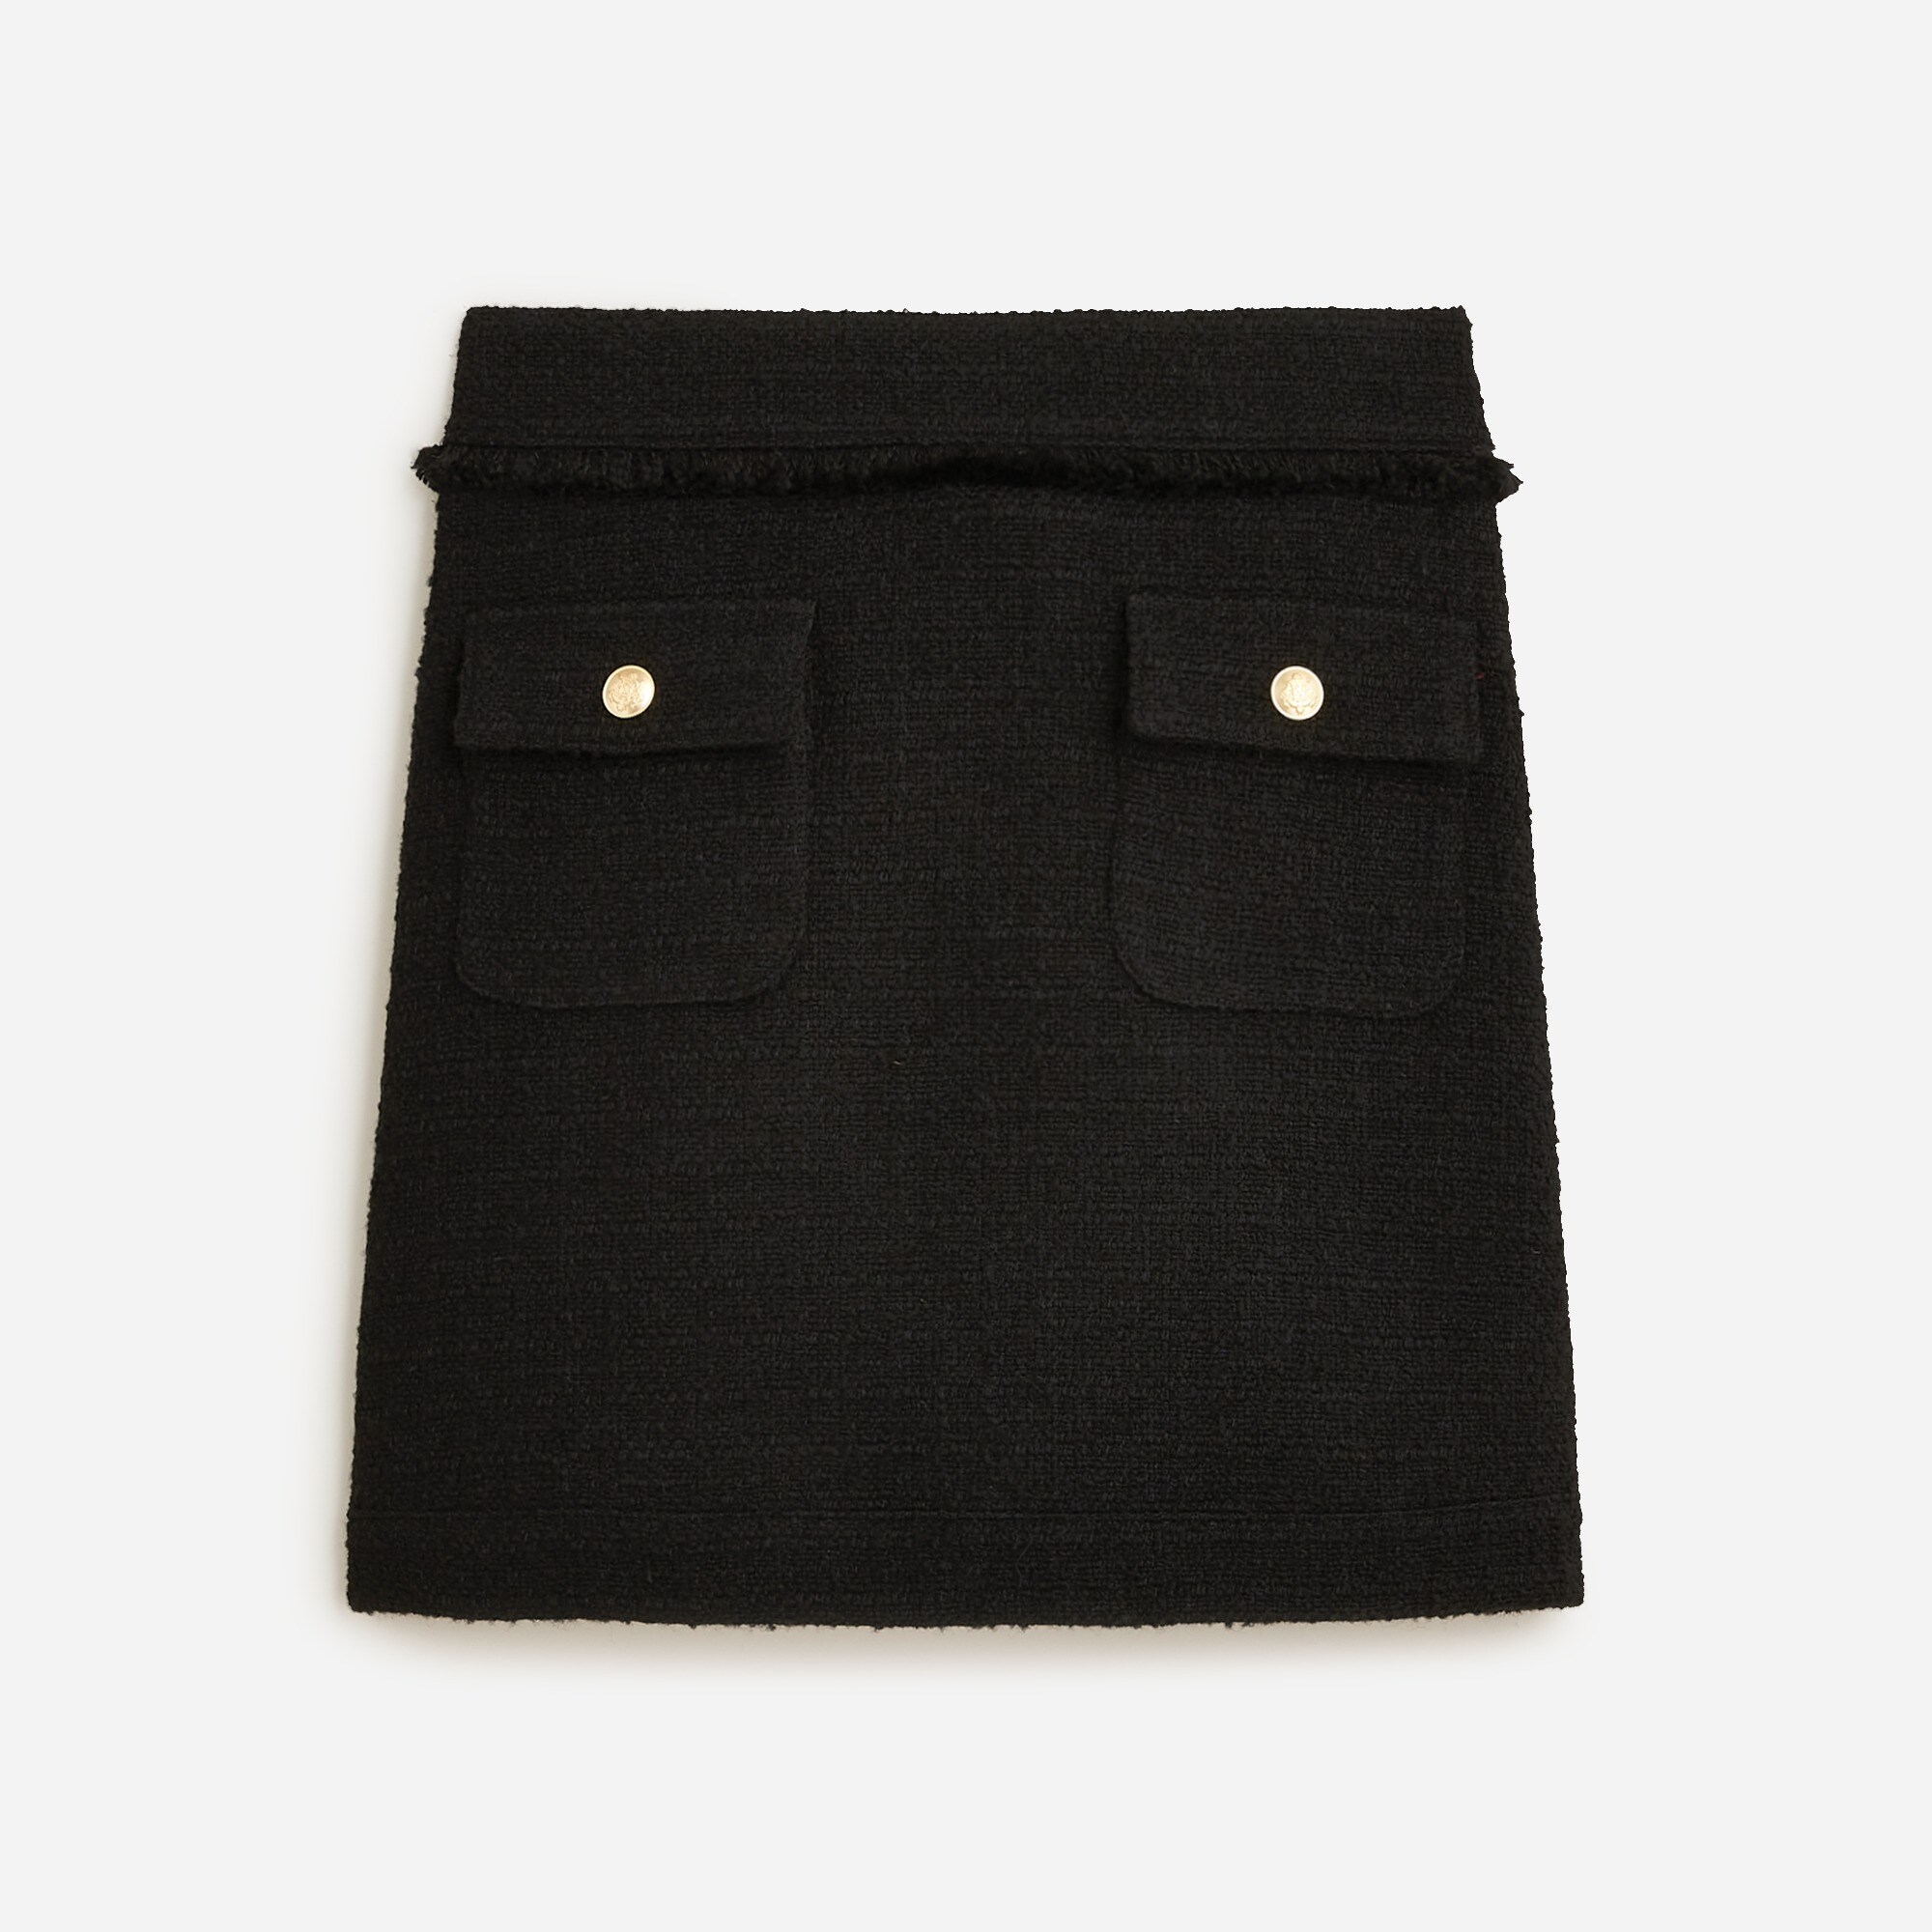  Patch-pocket mini skirt in tweed